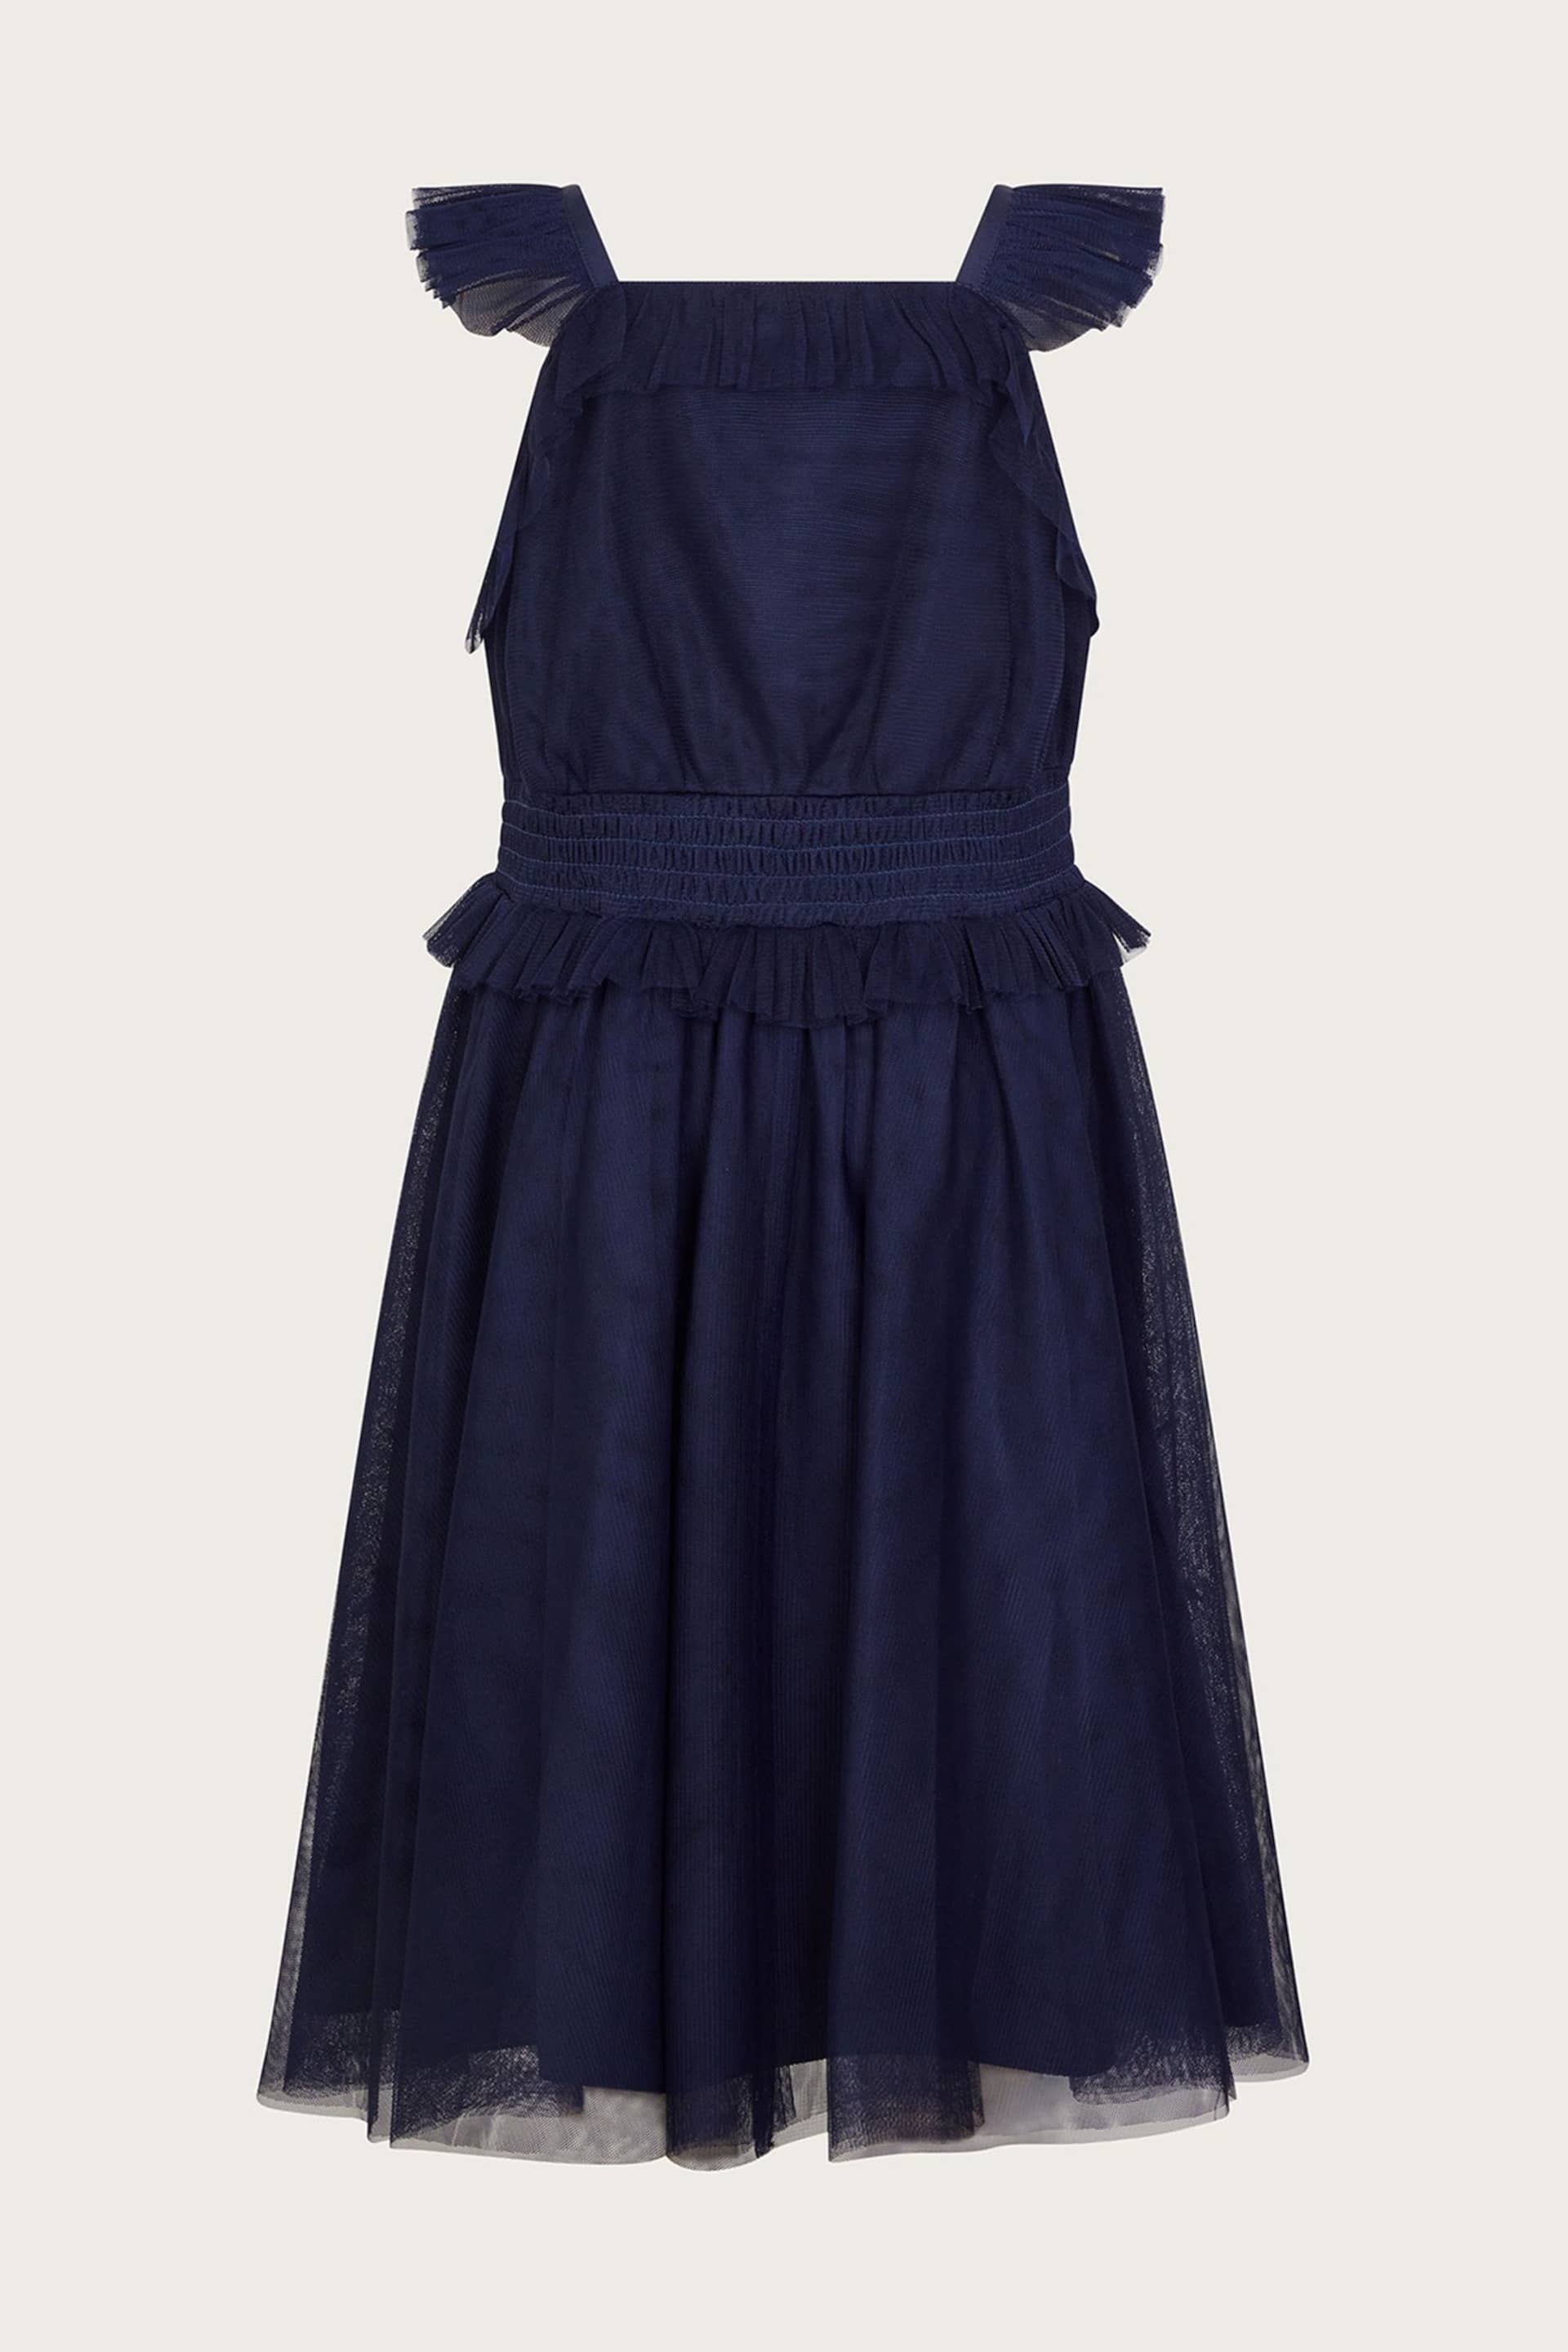 Monsoon Blue Ria Sequin Embellished Dress - Image 2 of 3